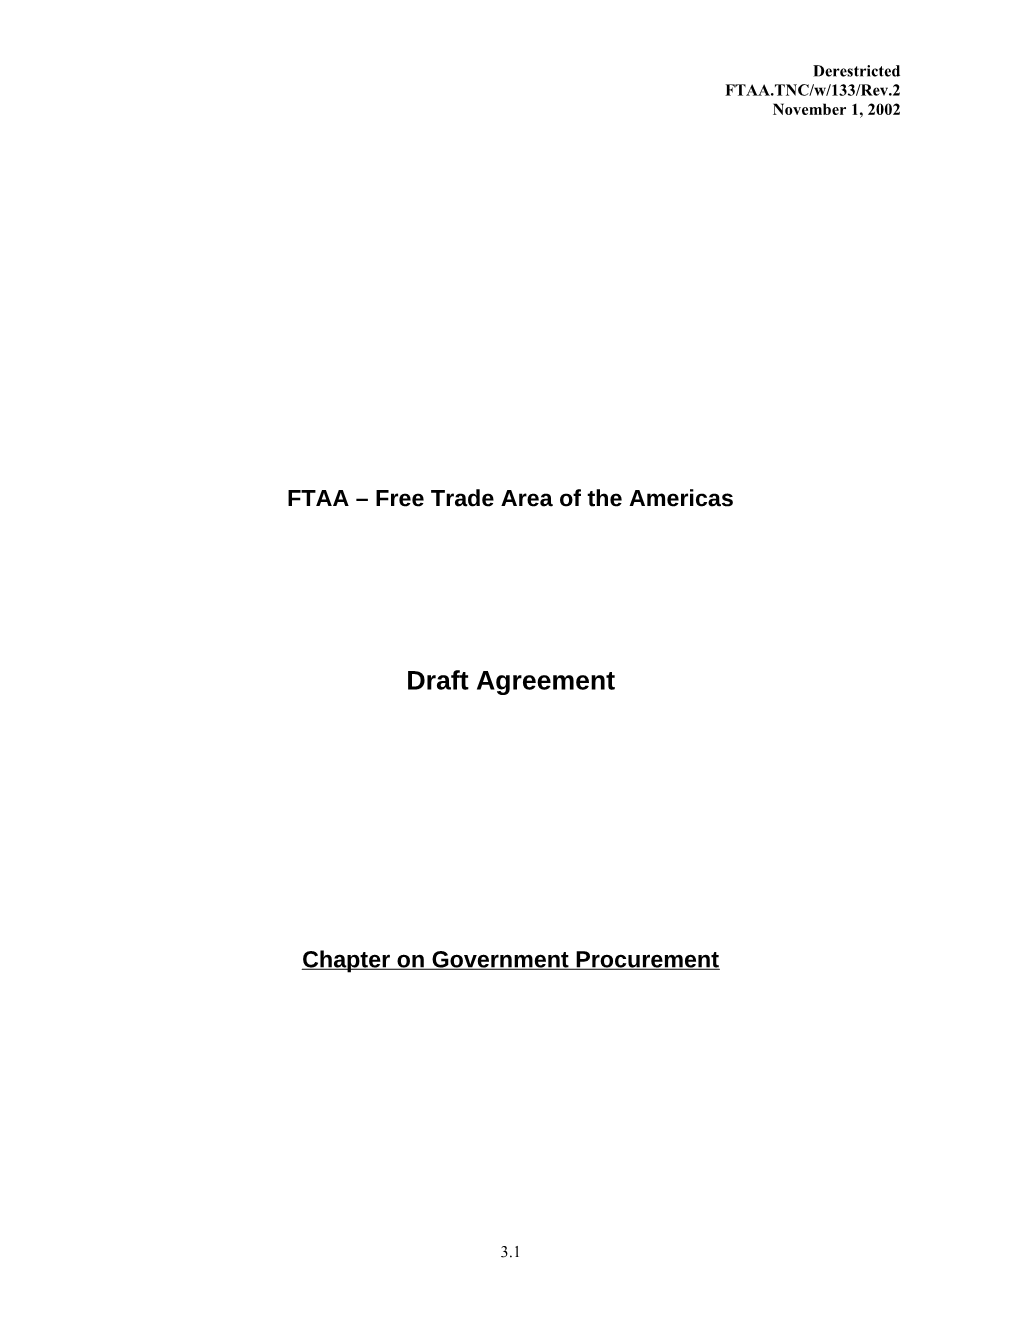 FTAA.TNC/W/133/Rev.2 1 November 2002 Second FTAA Draft Agreement